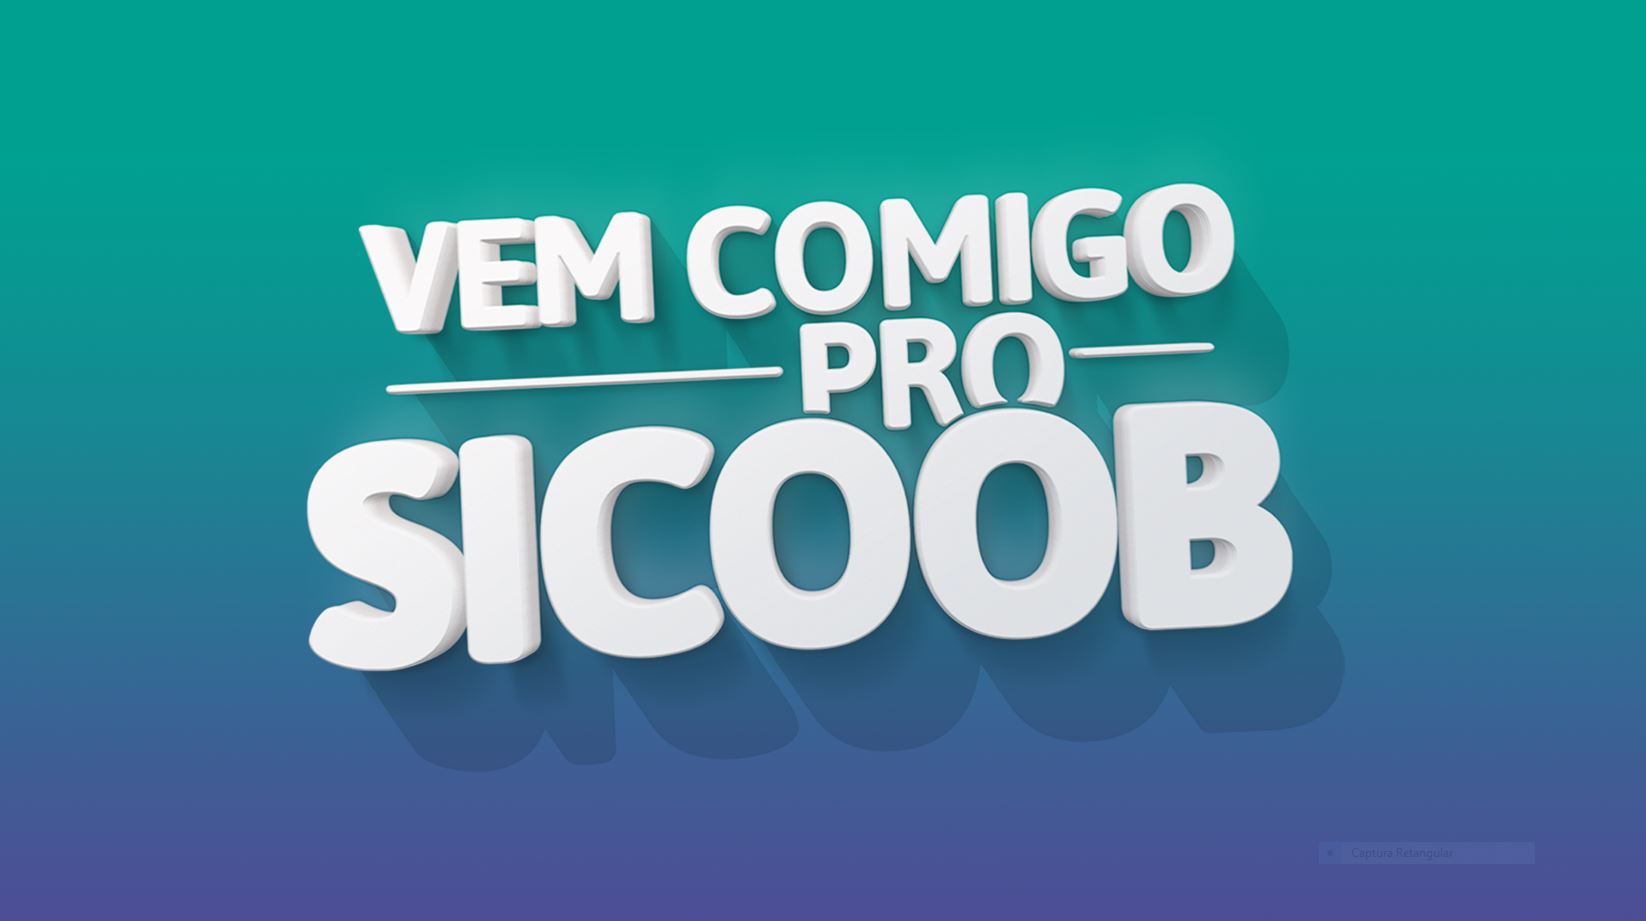 SICOOB: Campanha “Vem comigo pro Sicoob” vai sortear prêmios para novos cooperados